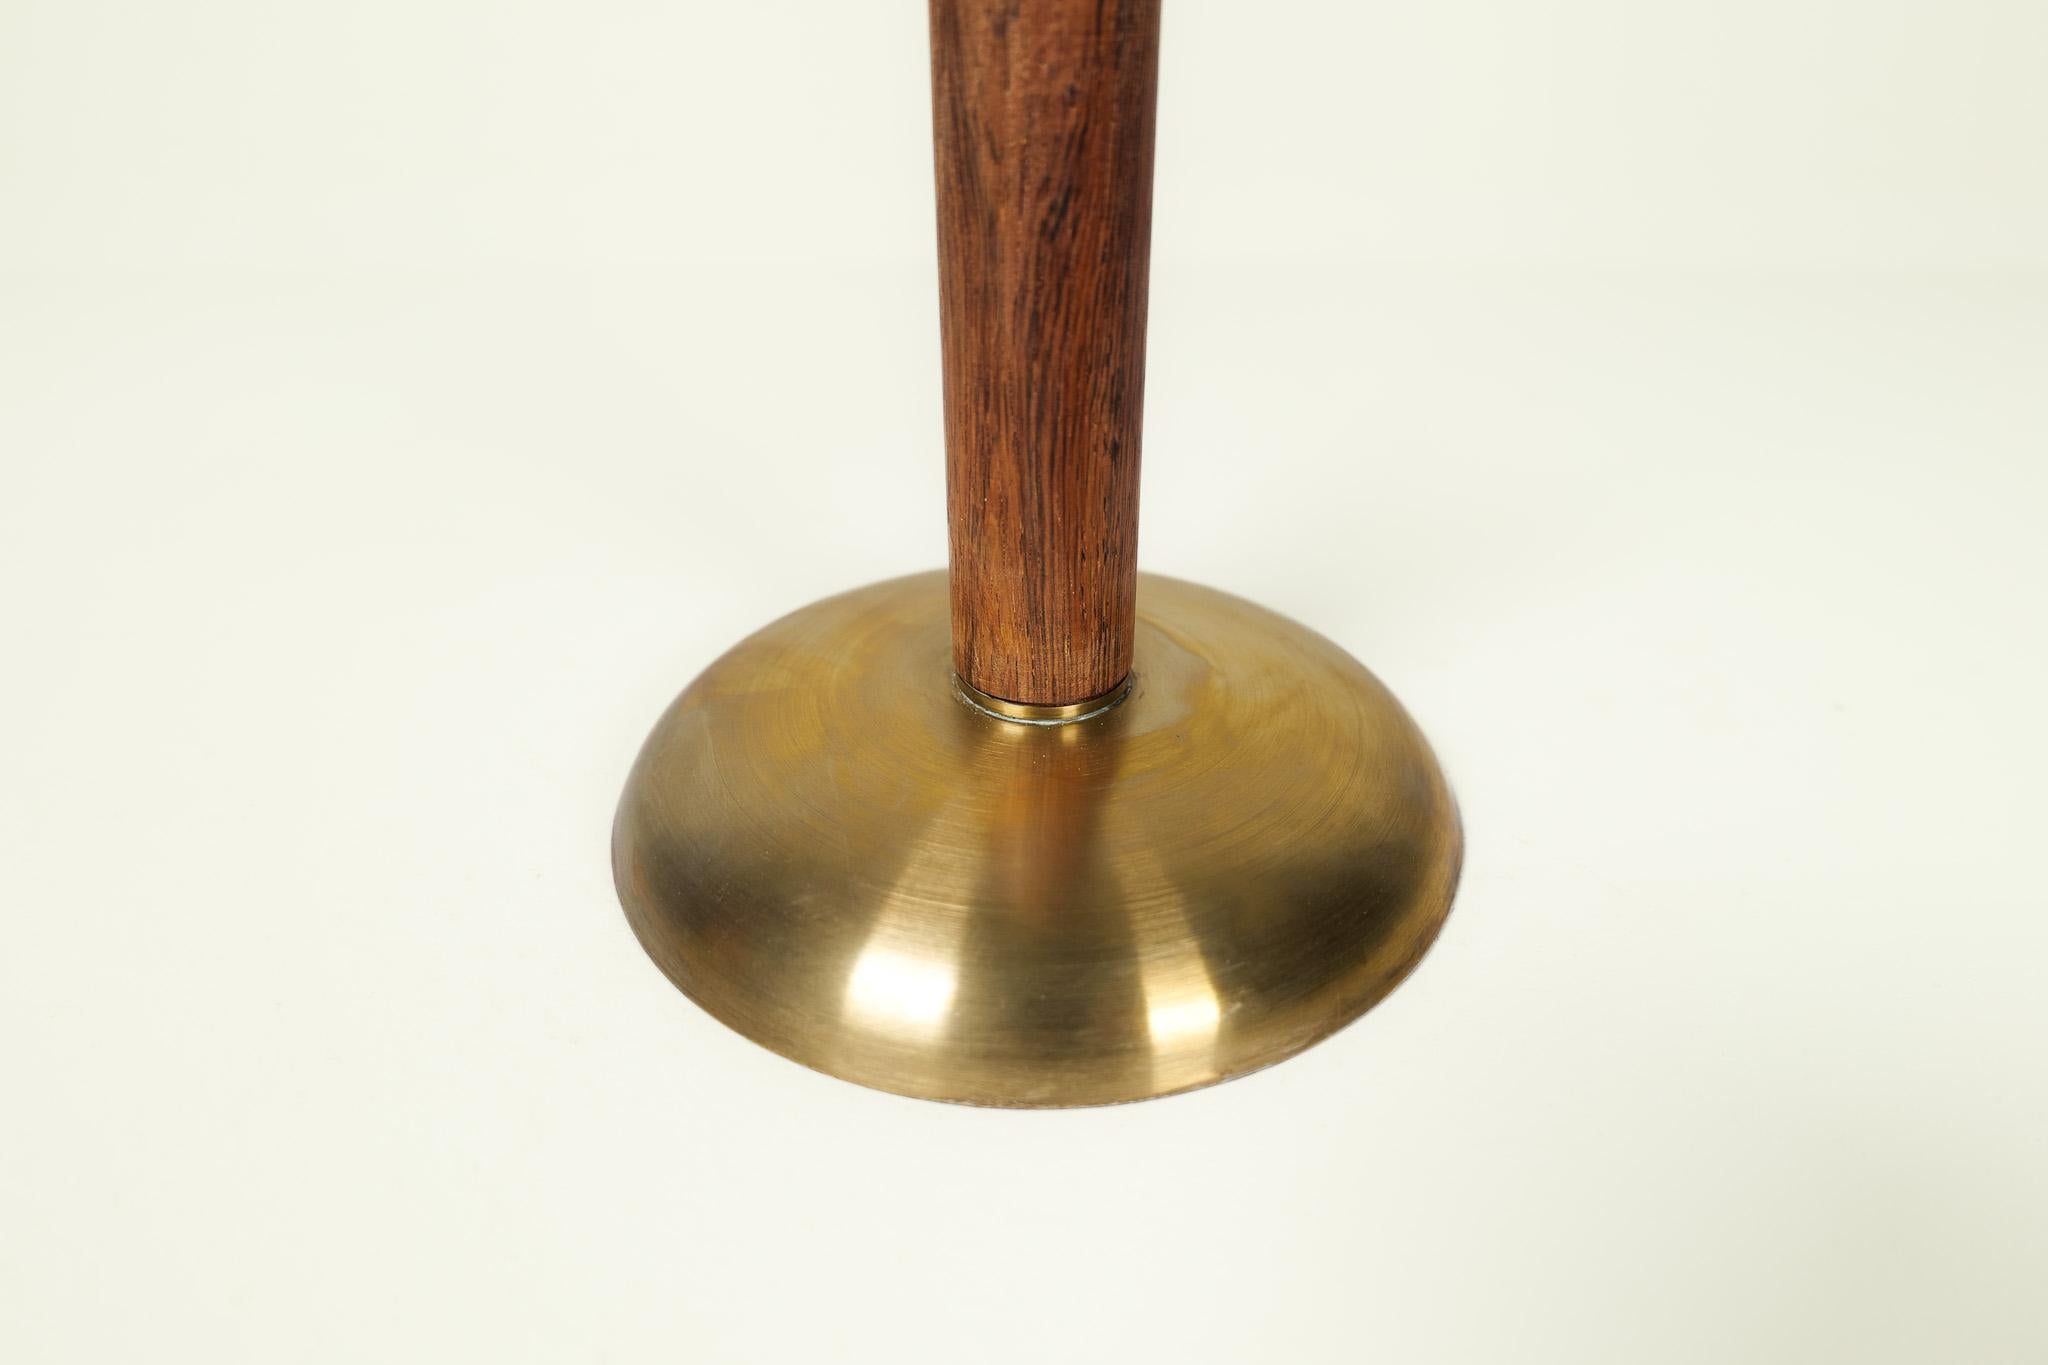 Midcentury Modern Rare Brass and Walnut Table Lamp by Einar Bäckström, Sweden For Sale 2